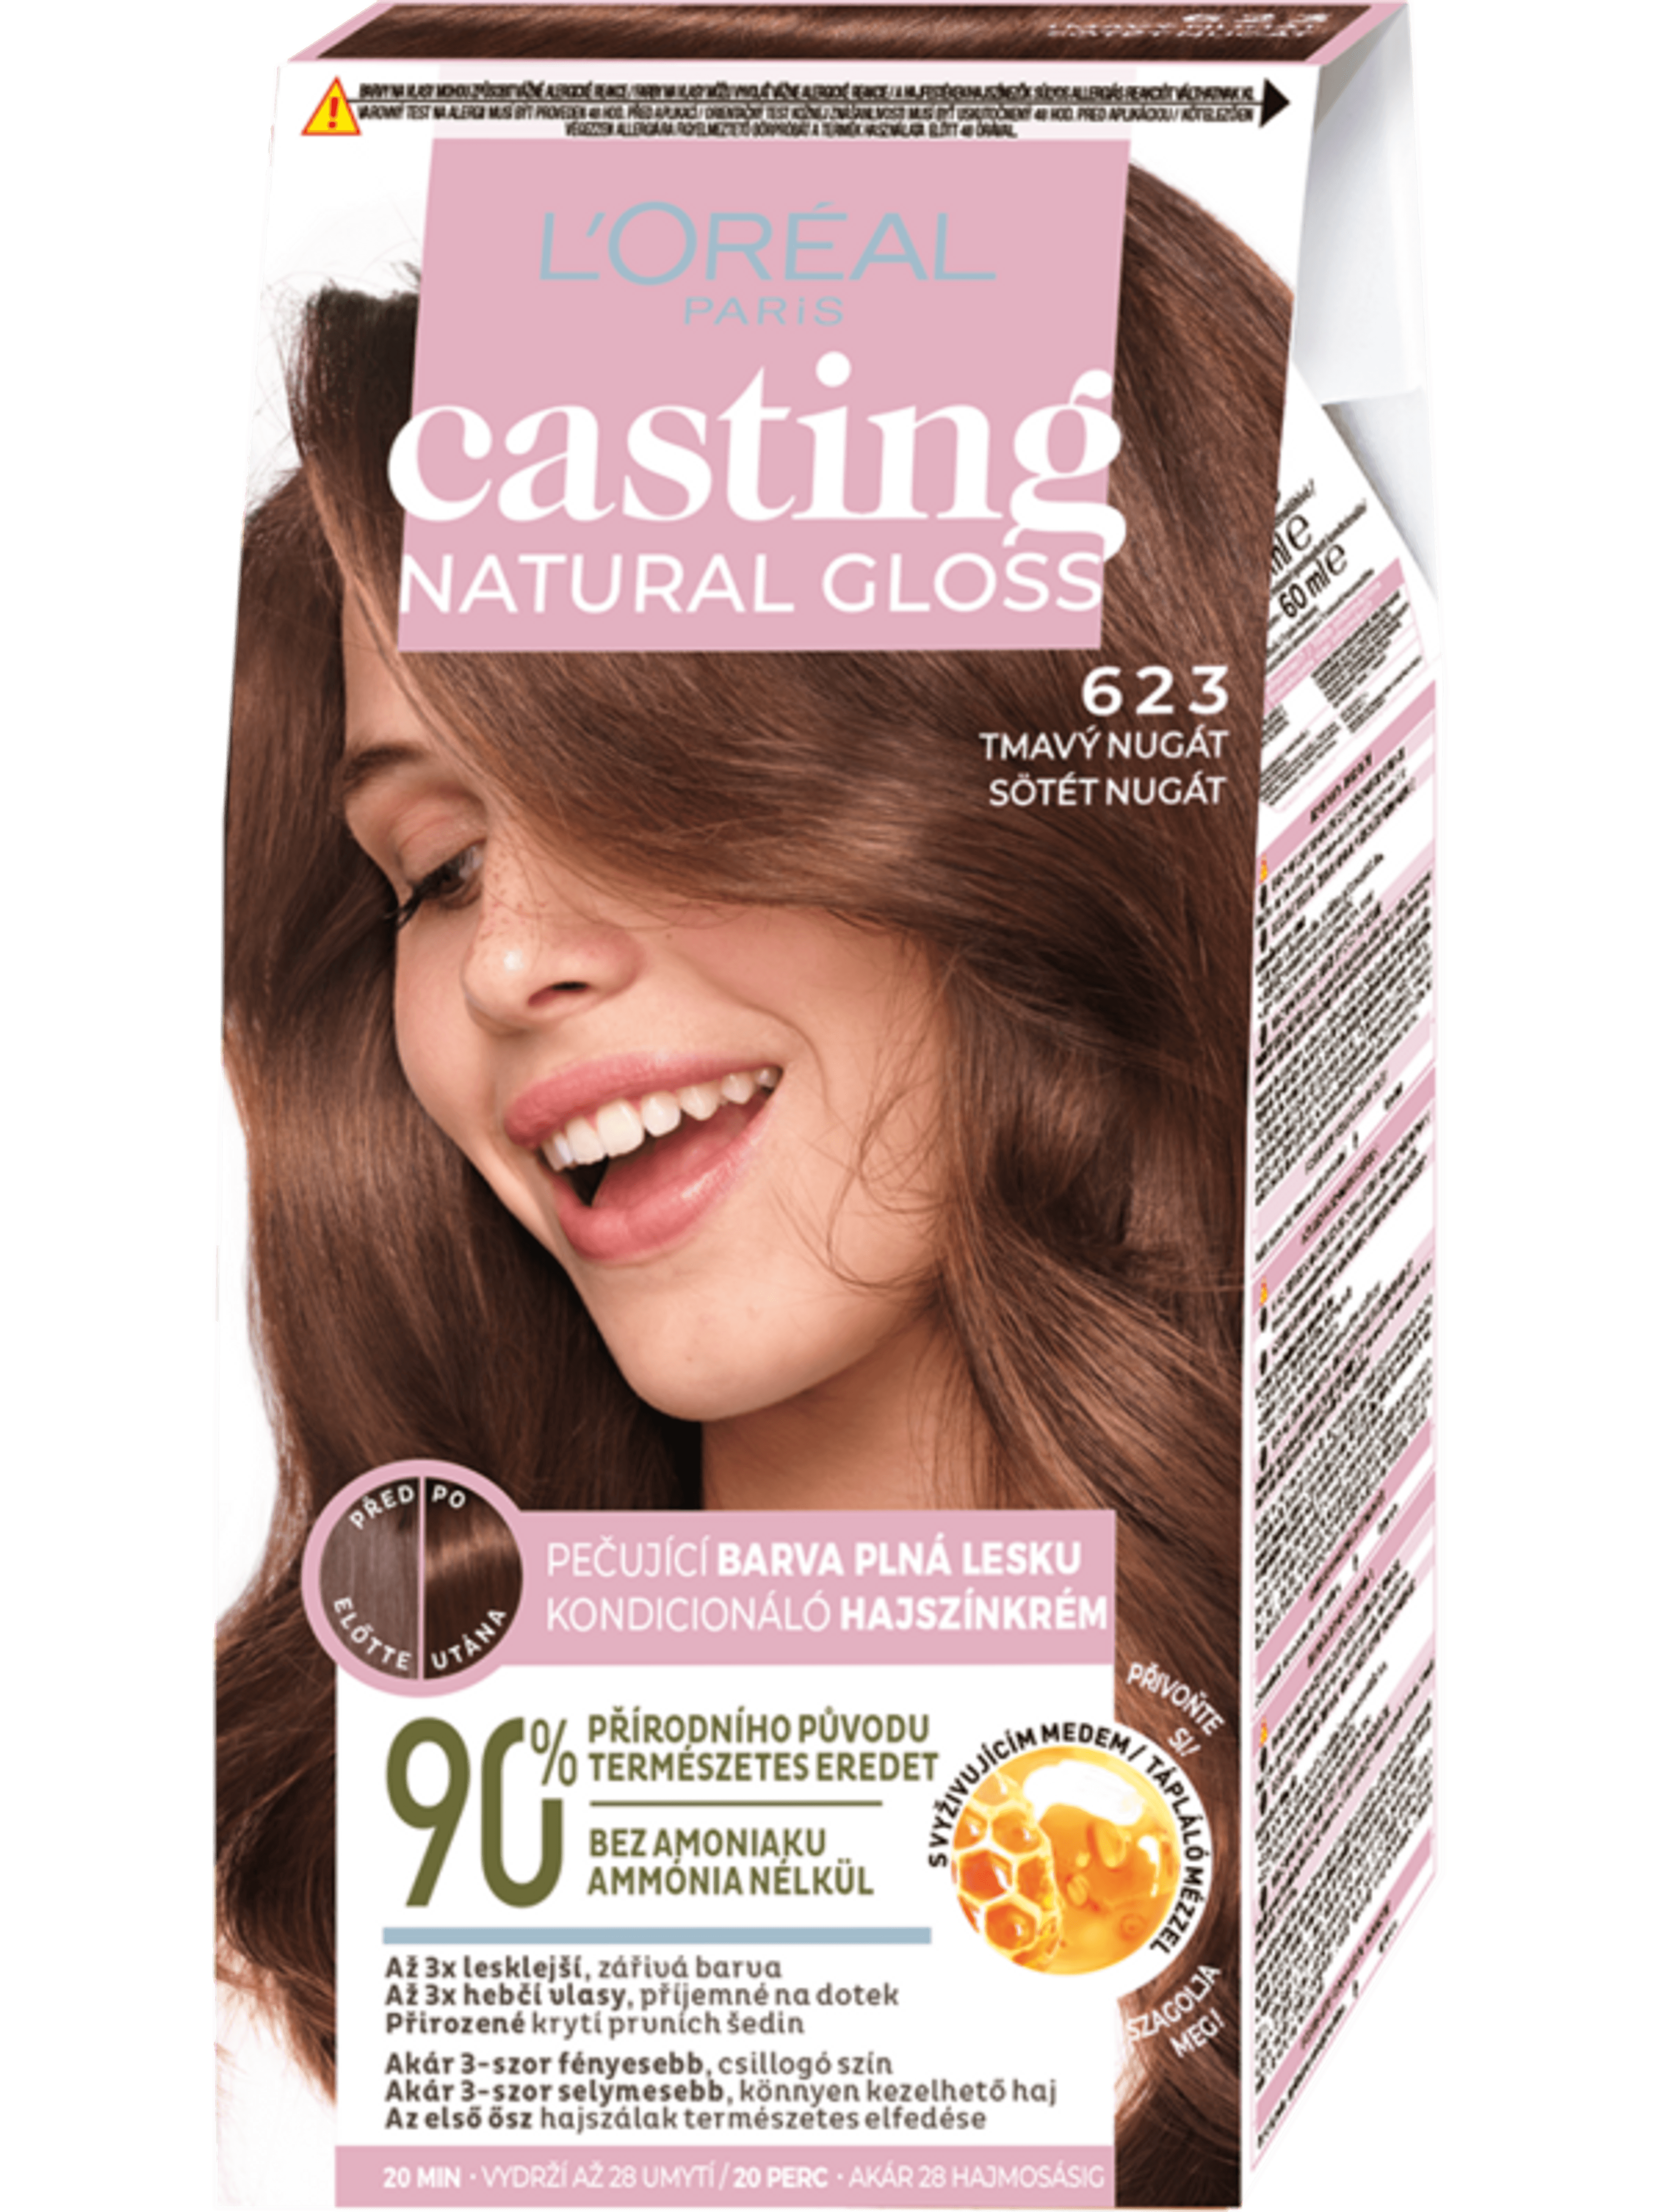 L'Oreal Paris Casting Natural Gloss hajszínező, 623 blonde miel - 1 db-2